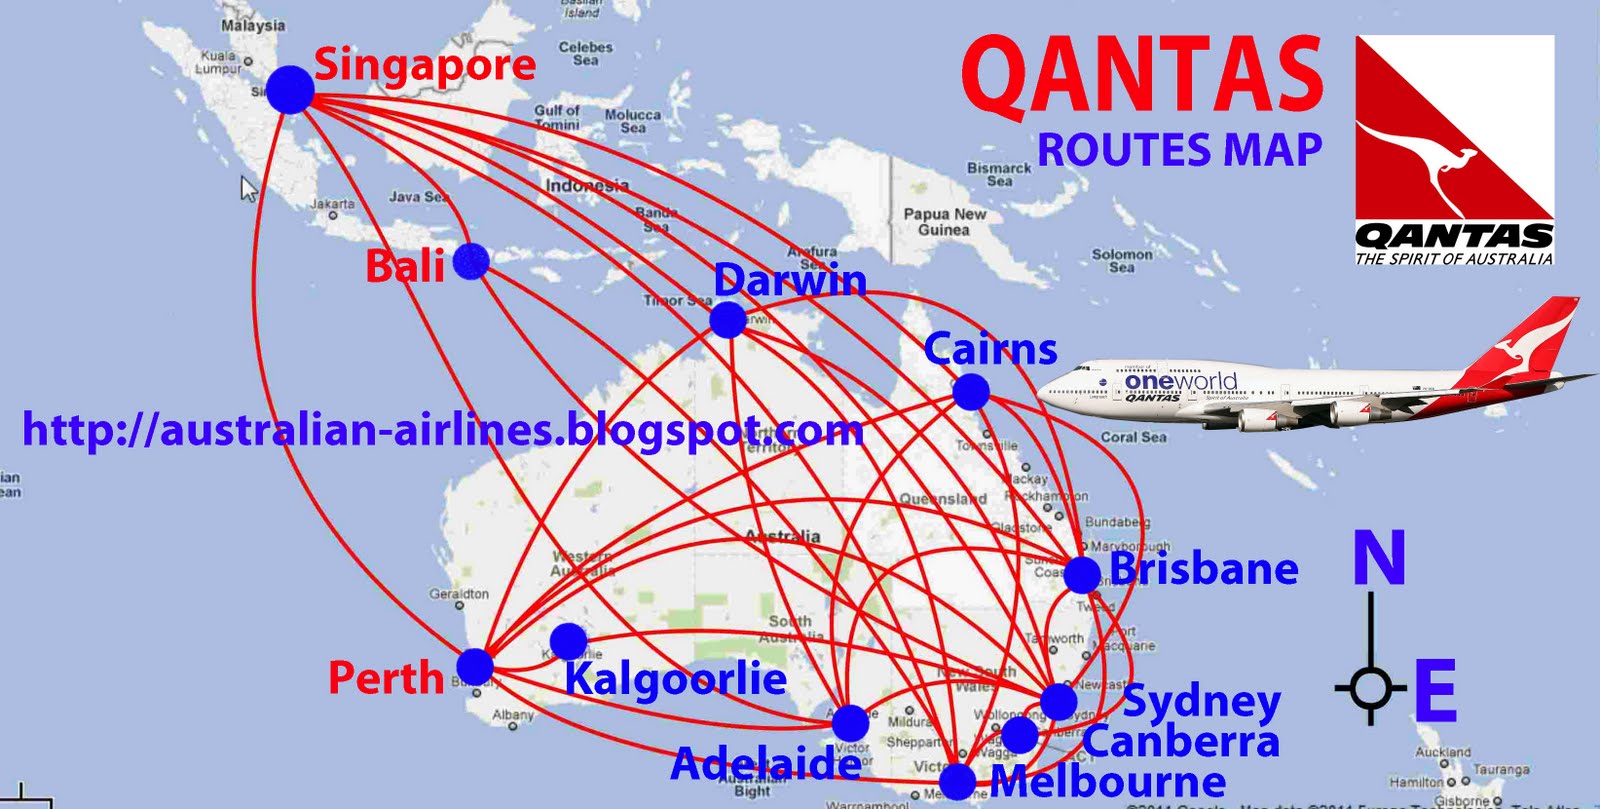 civil aviation: Qantas routes map